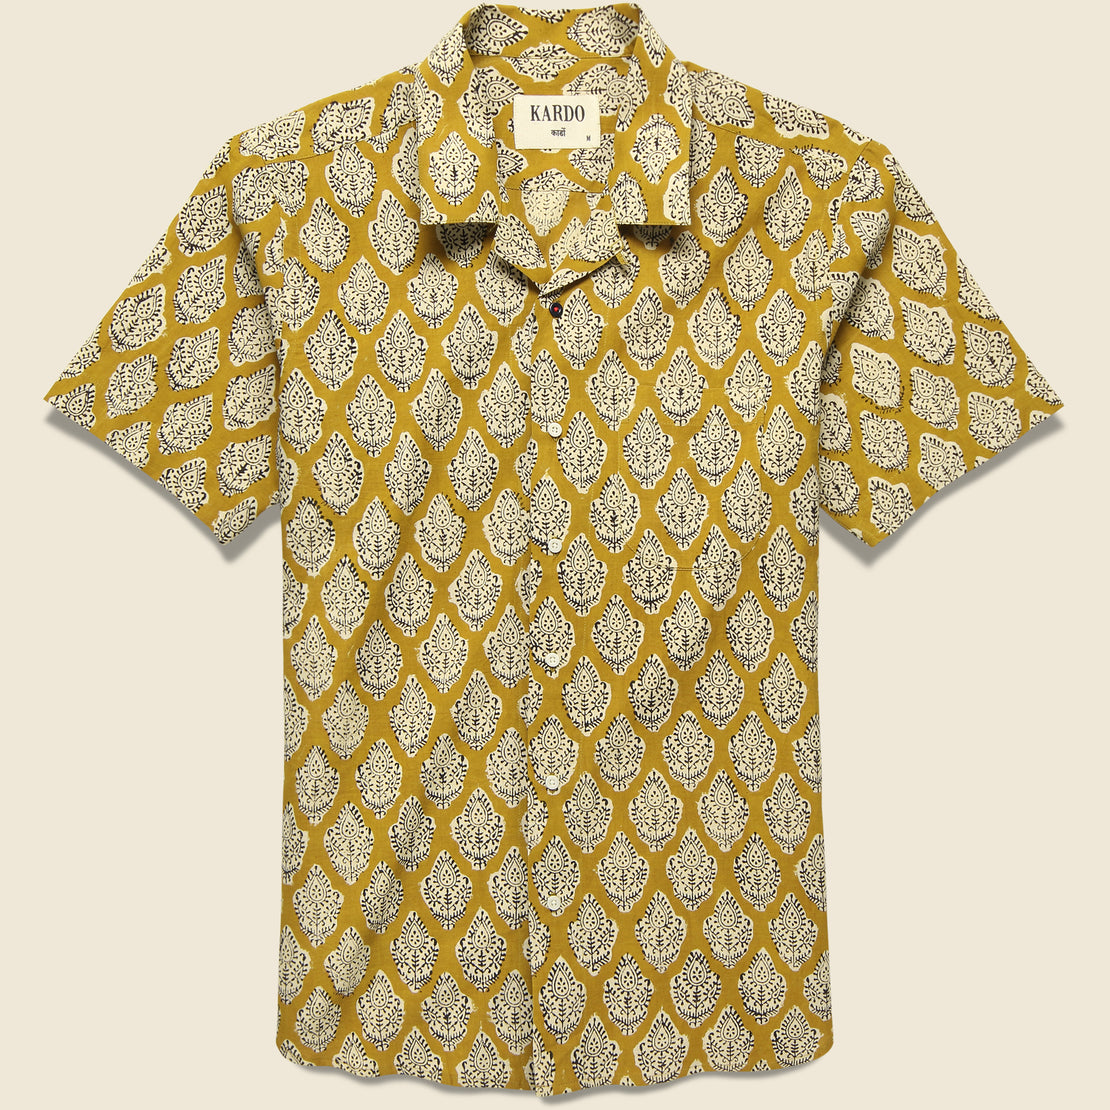 Kardo Lamar Block Print Paisley Shirt - Gold/Black